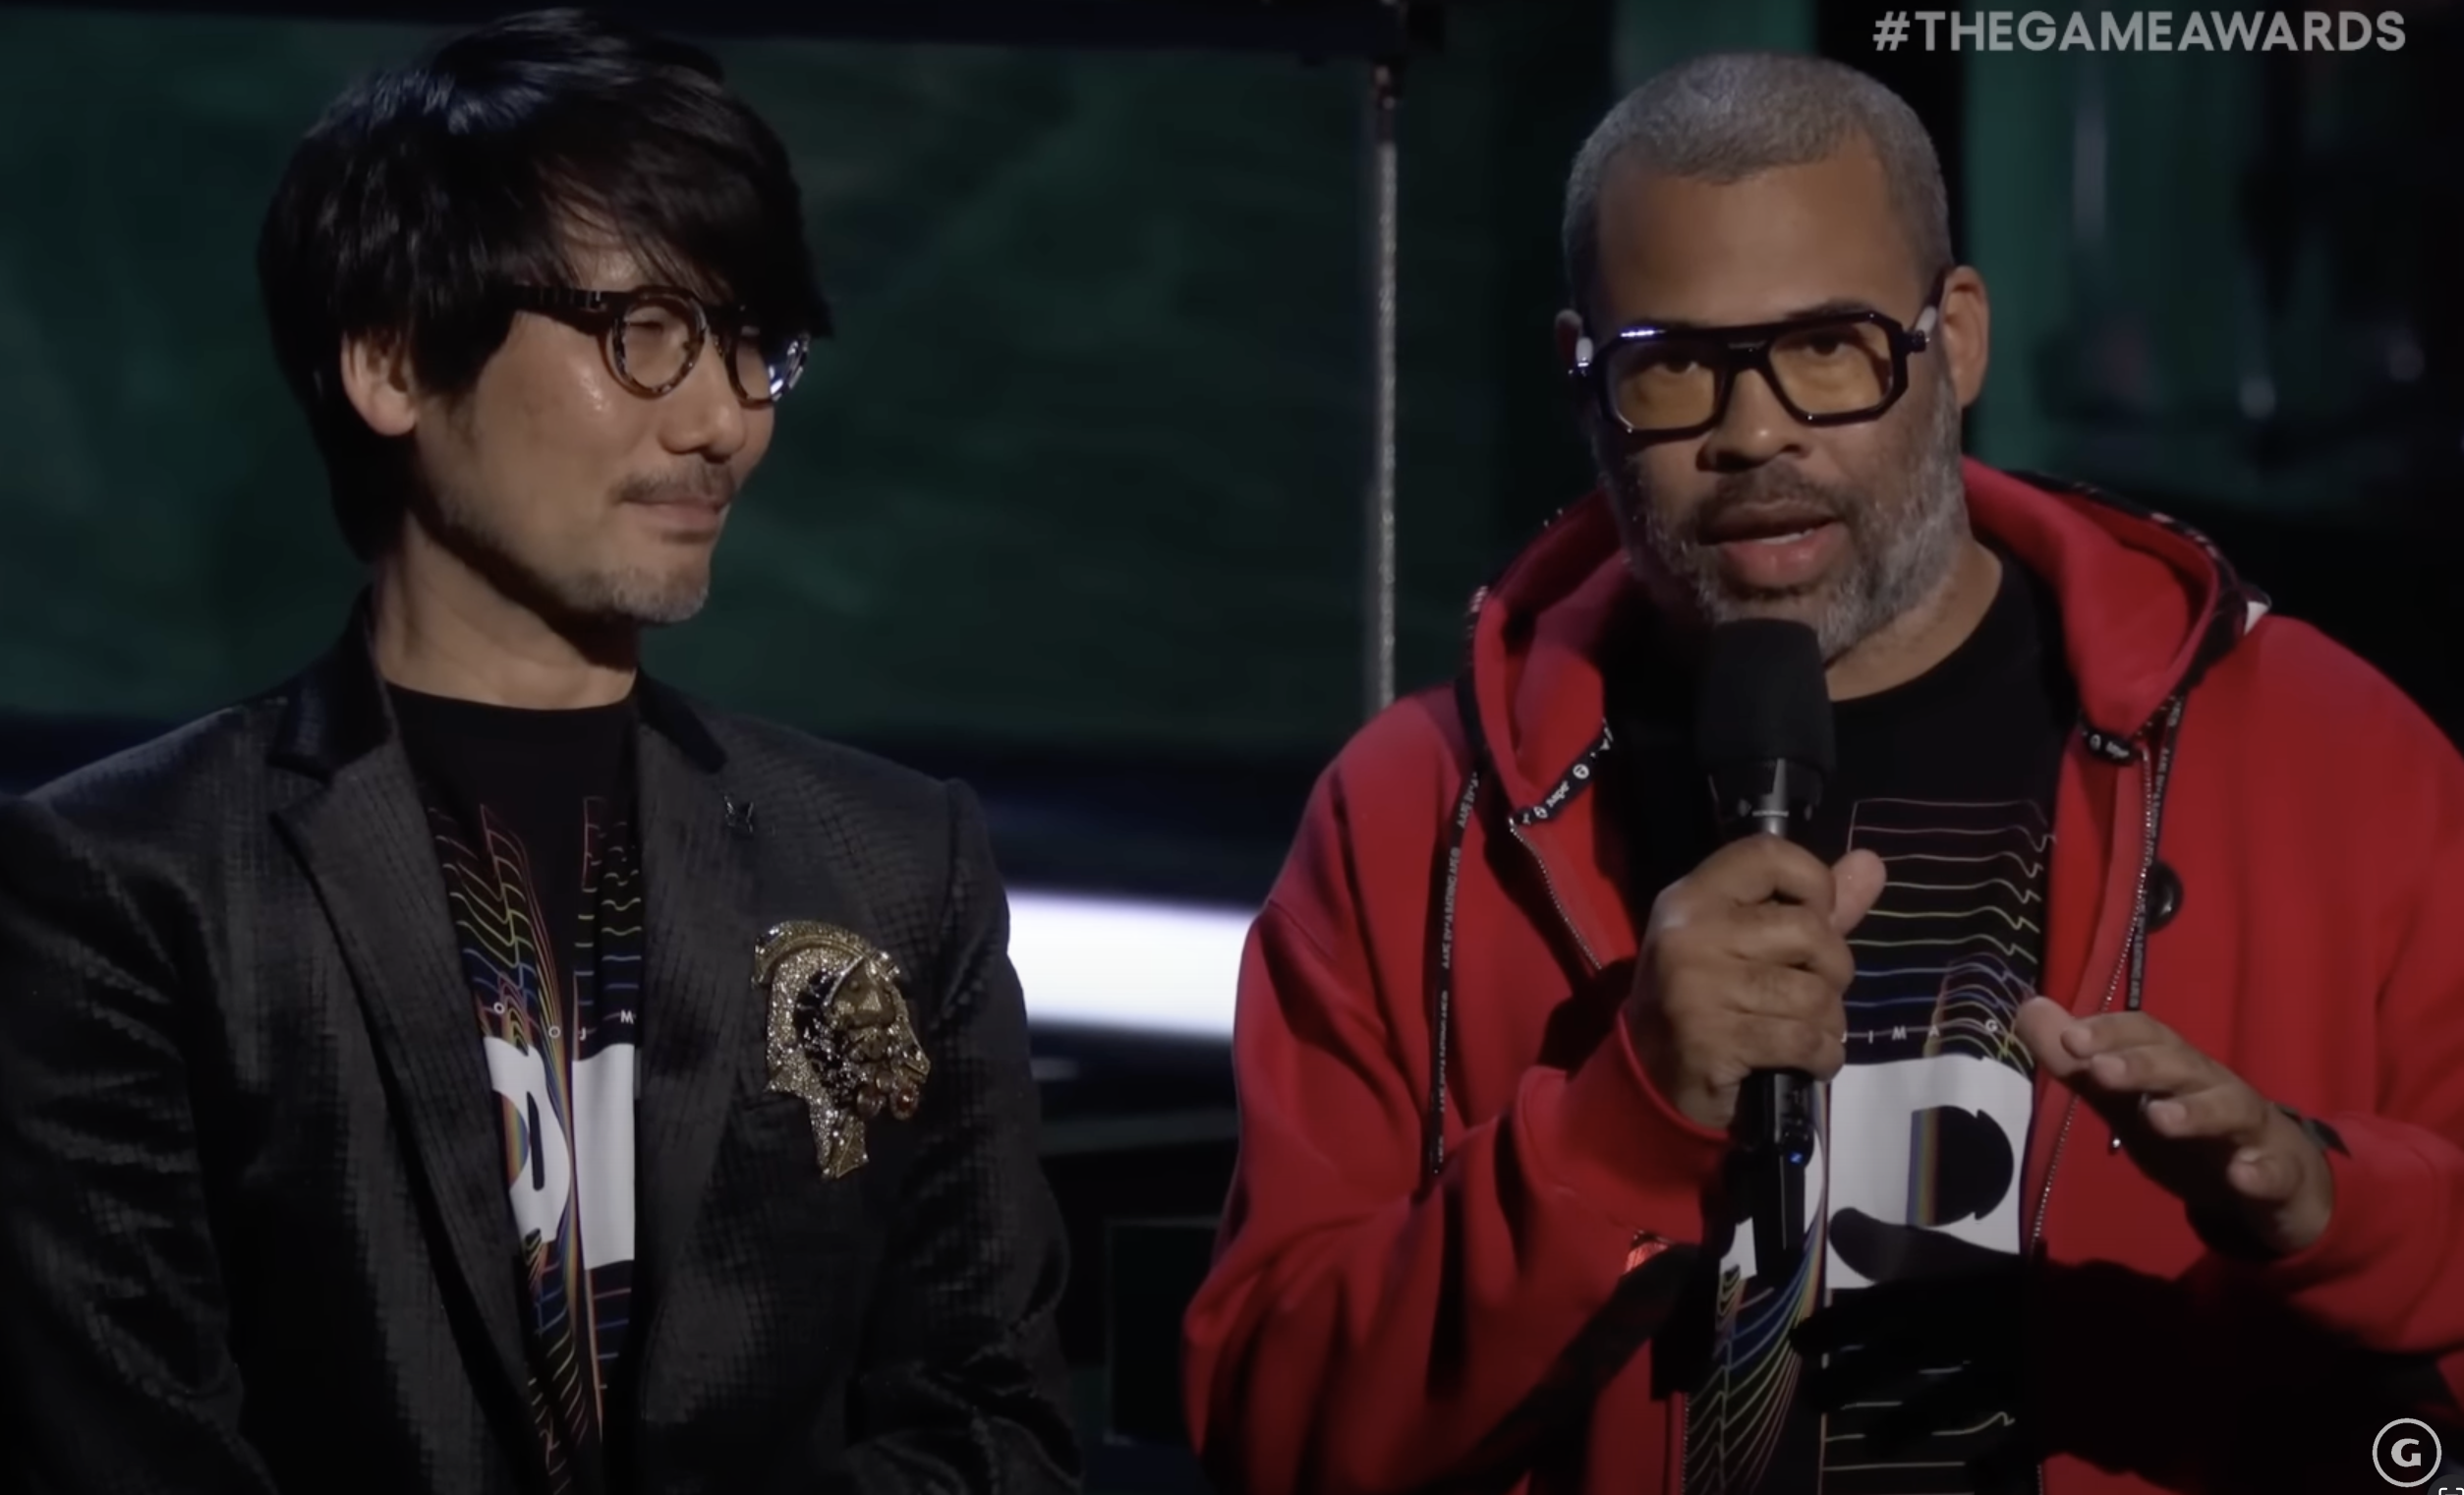 Hideo Kojima and Jordan Peele team up for new Xbox horror game